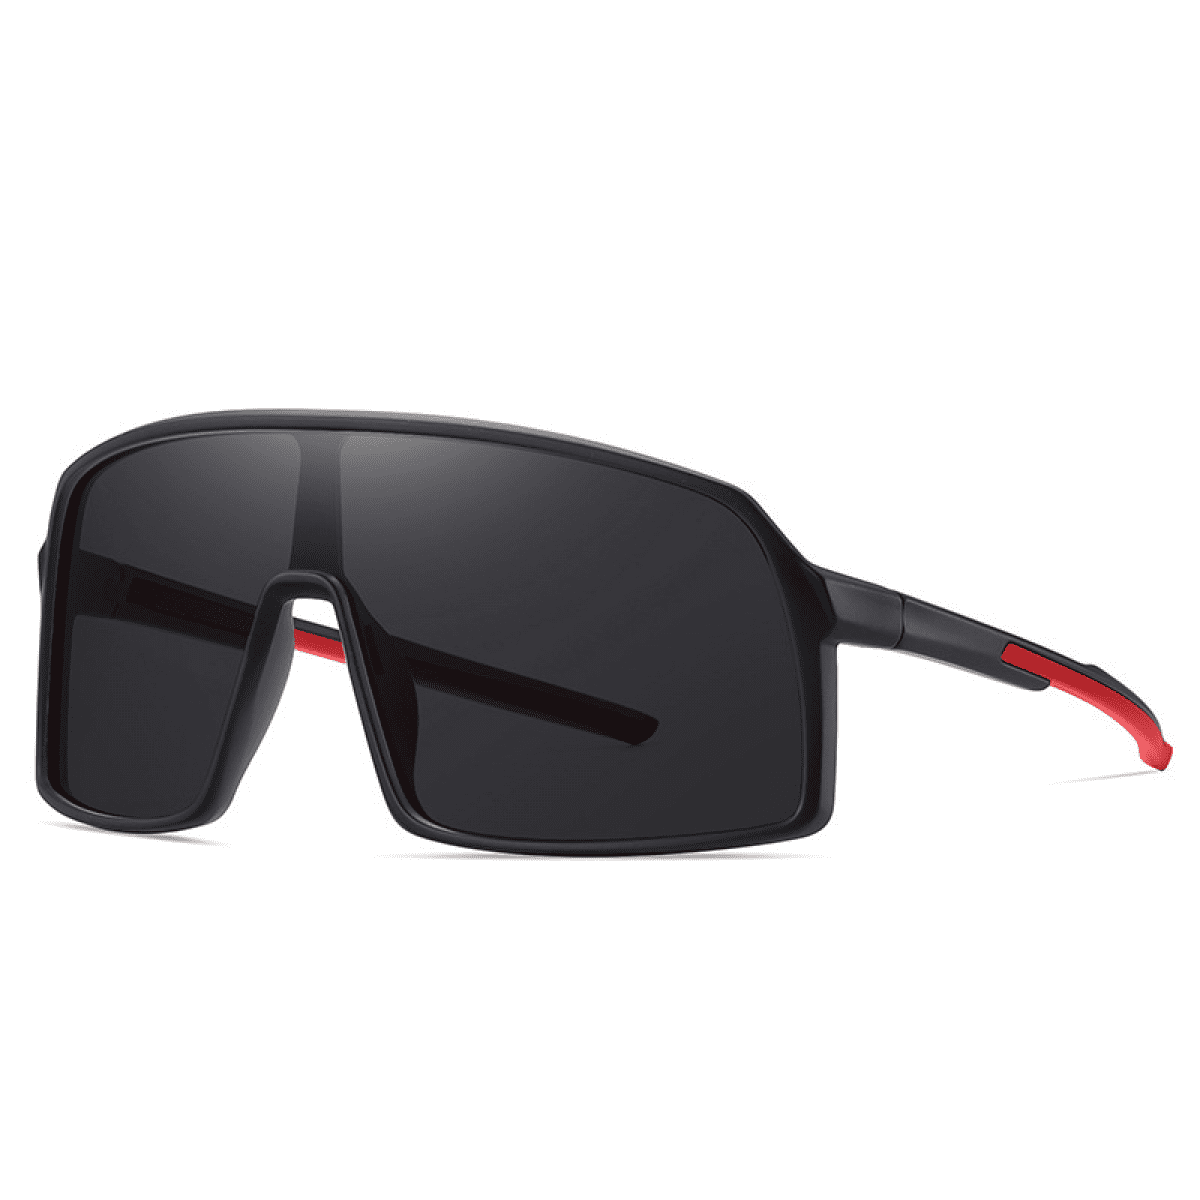 Sunglasses Polarized UV400 For Men Women Cycling Outdoor Sports Ski Ride Tr90 Glasses 